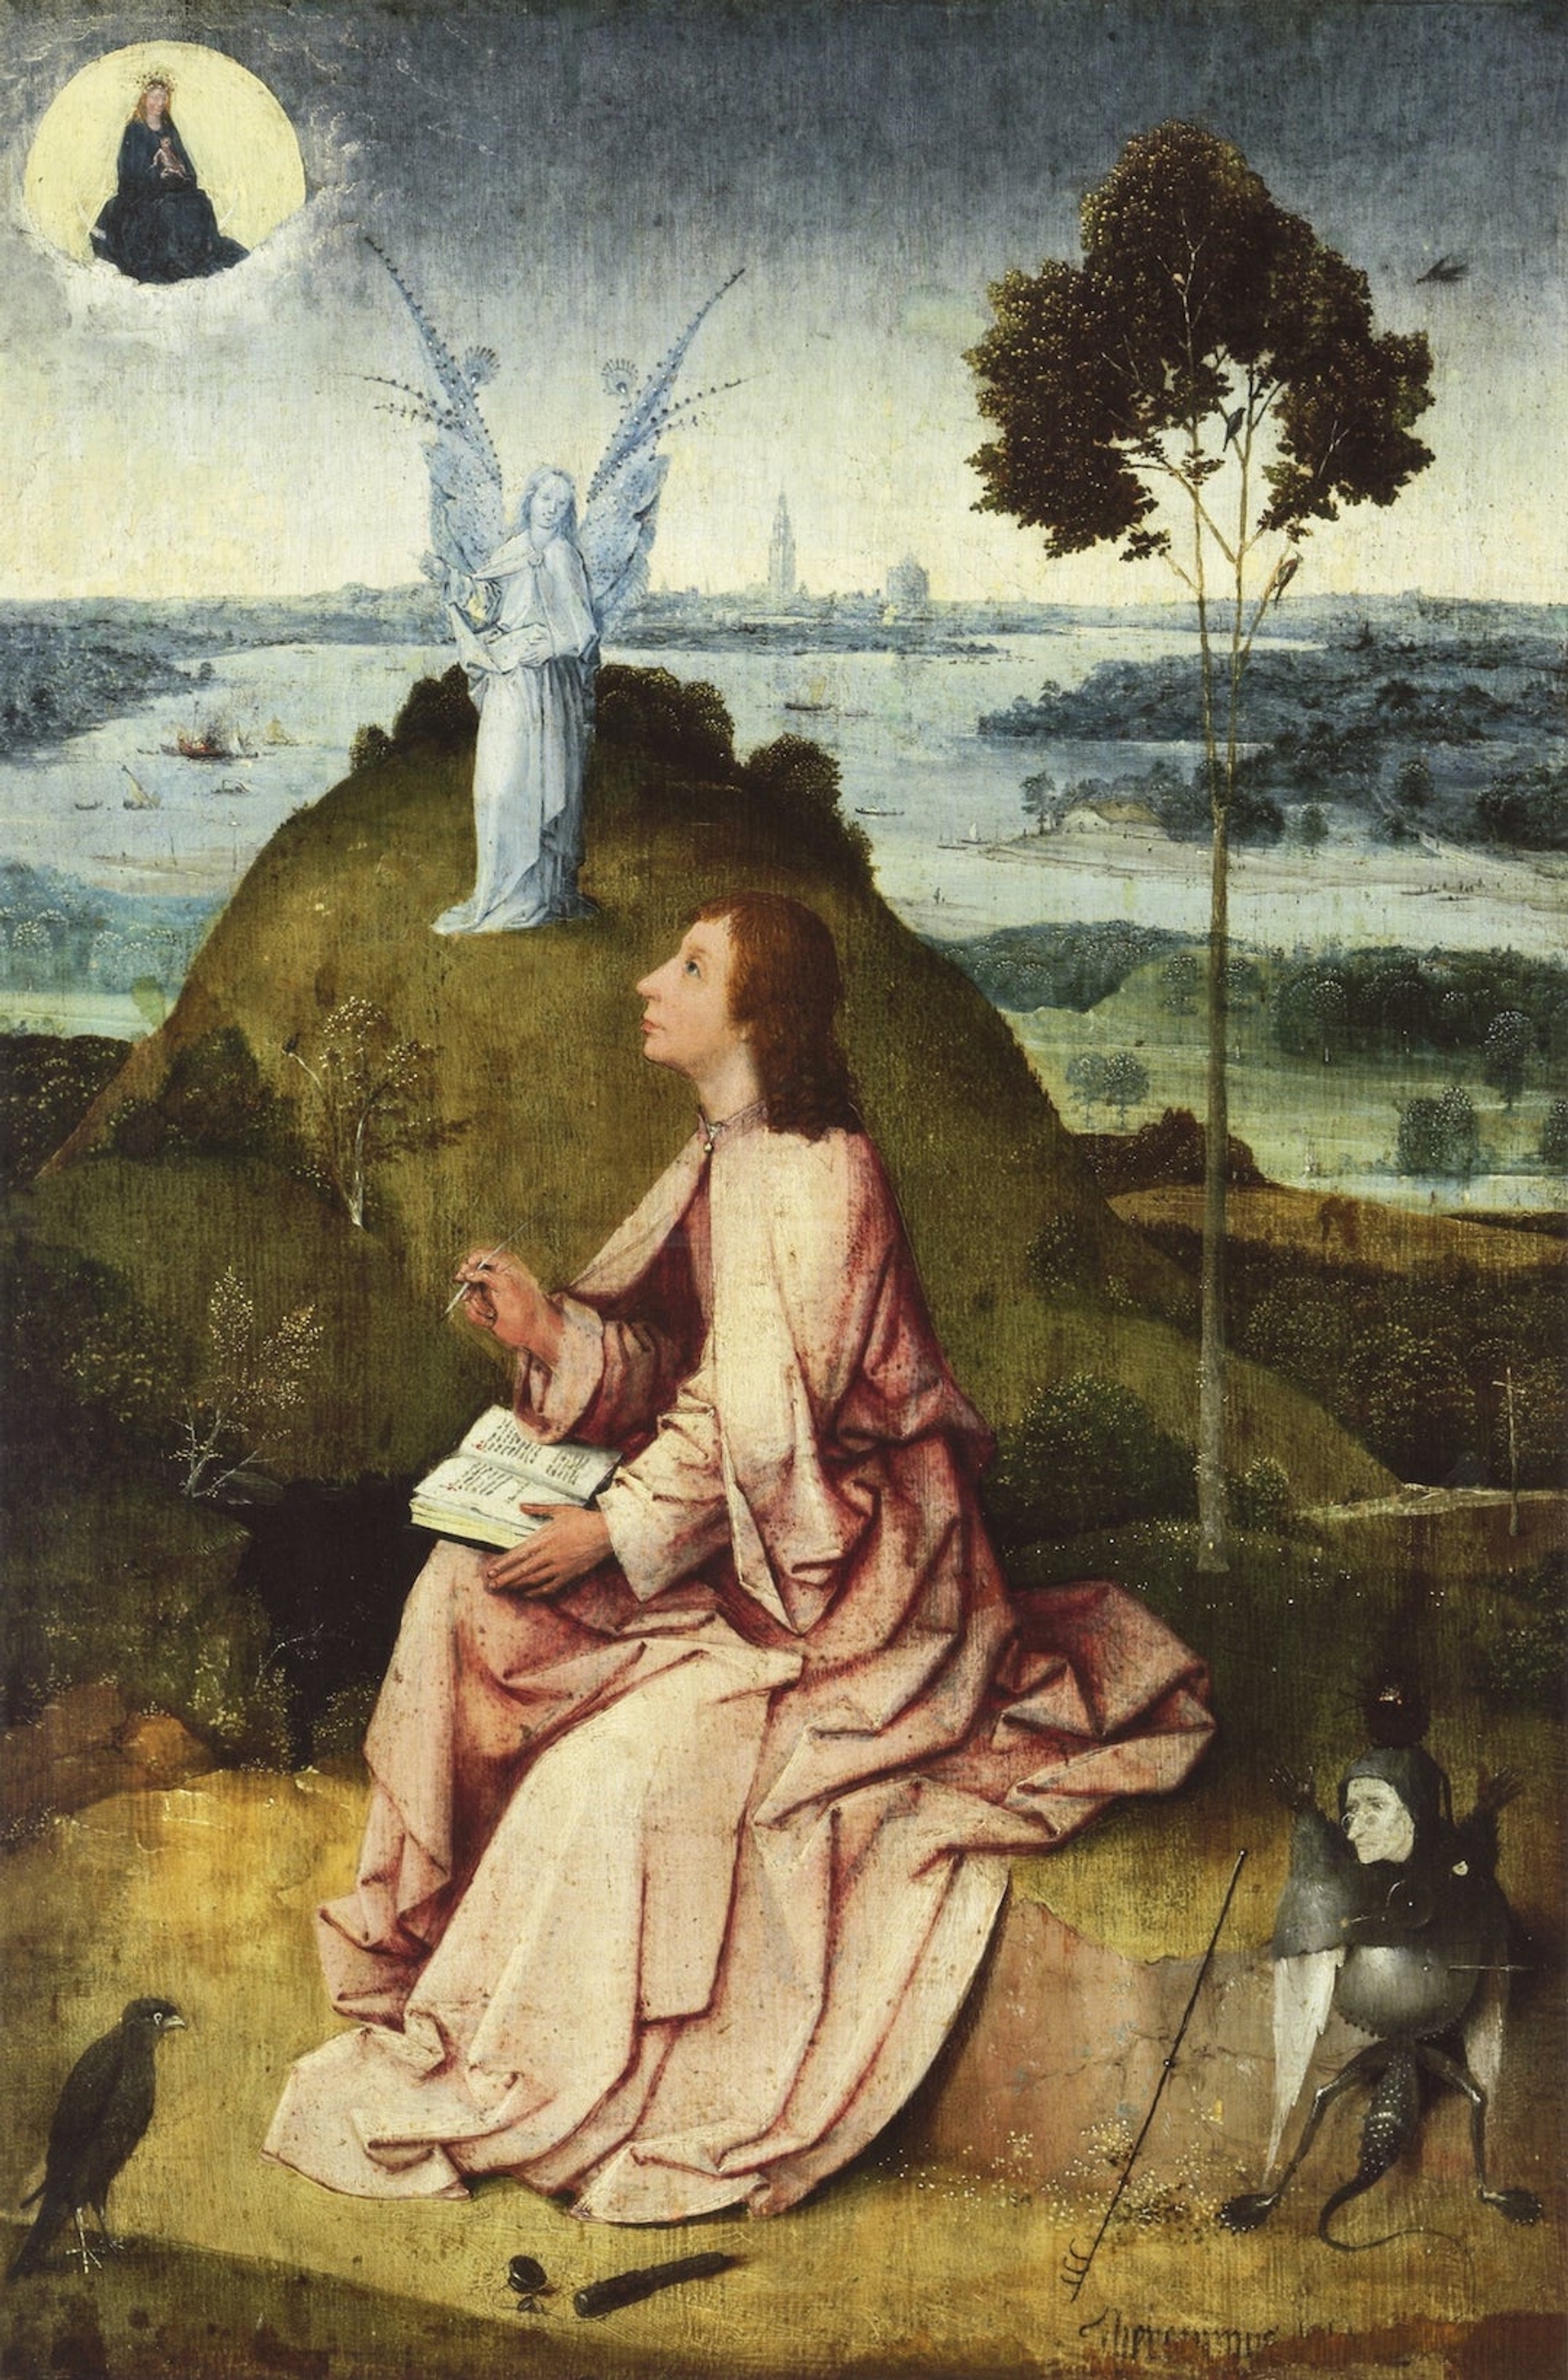 Hieronymus Bosch, St. John the Evangelist on Patmos, 1488